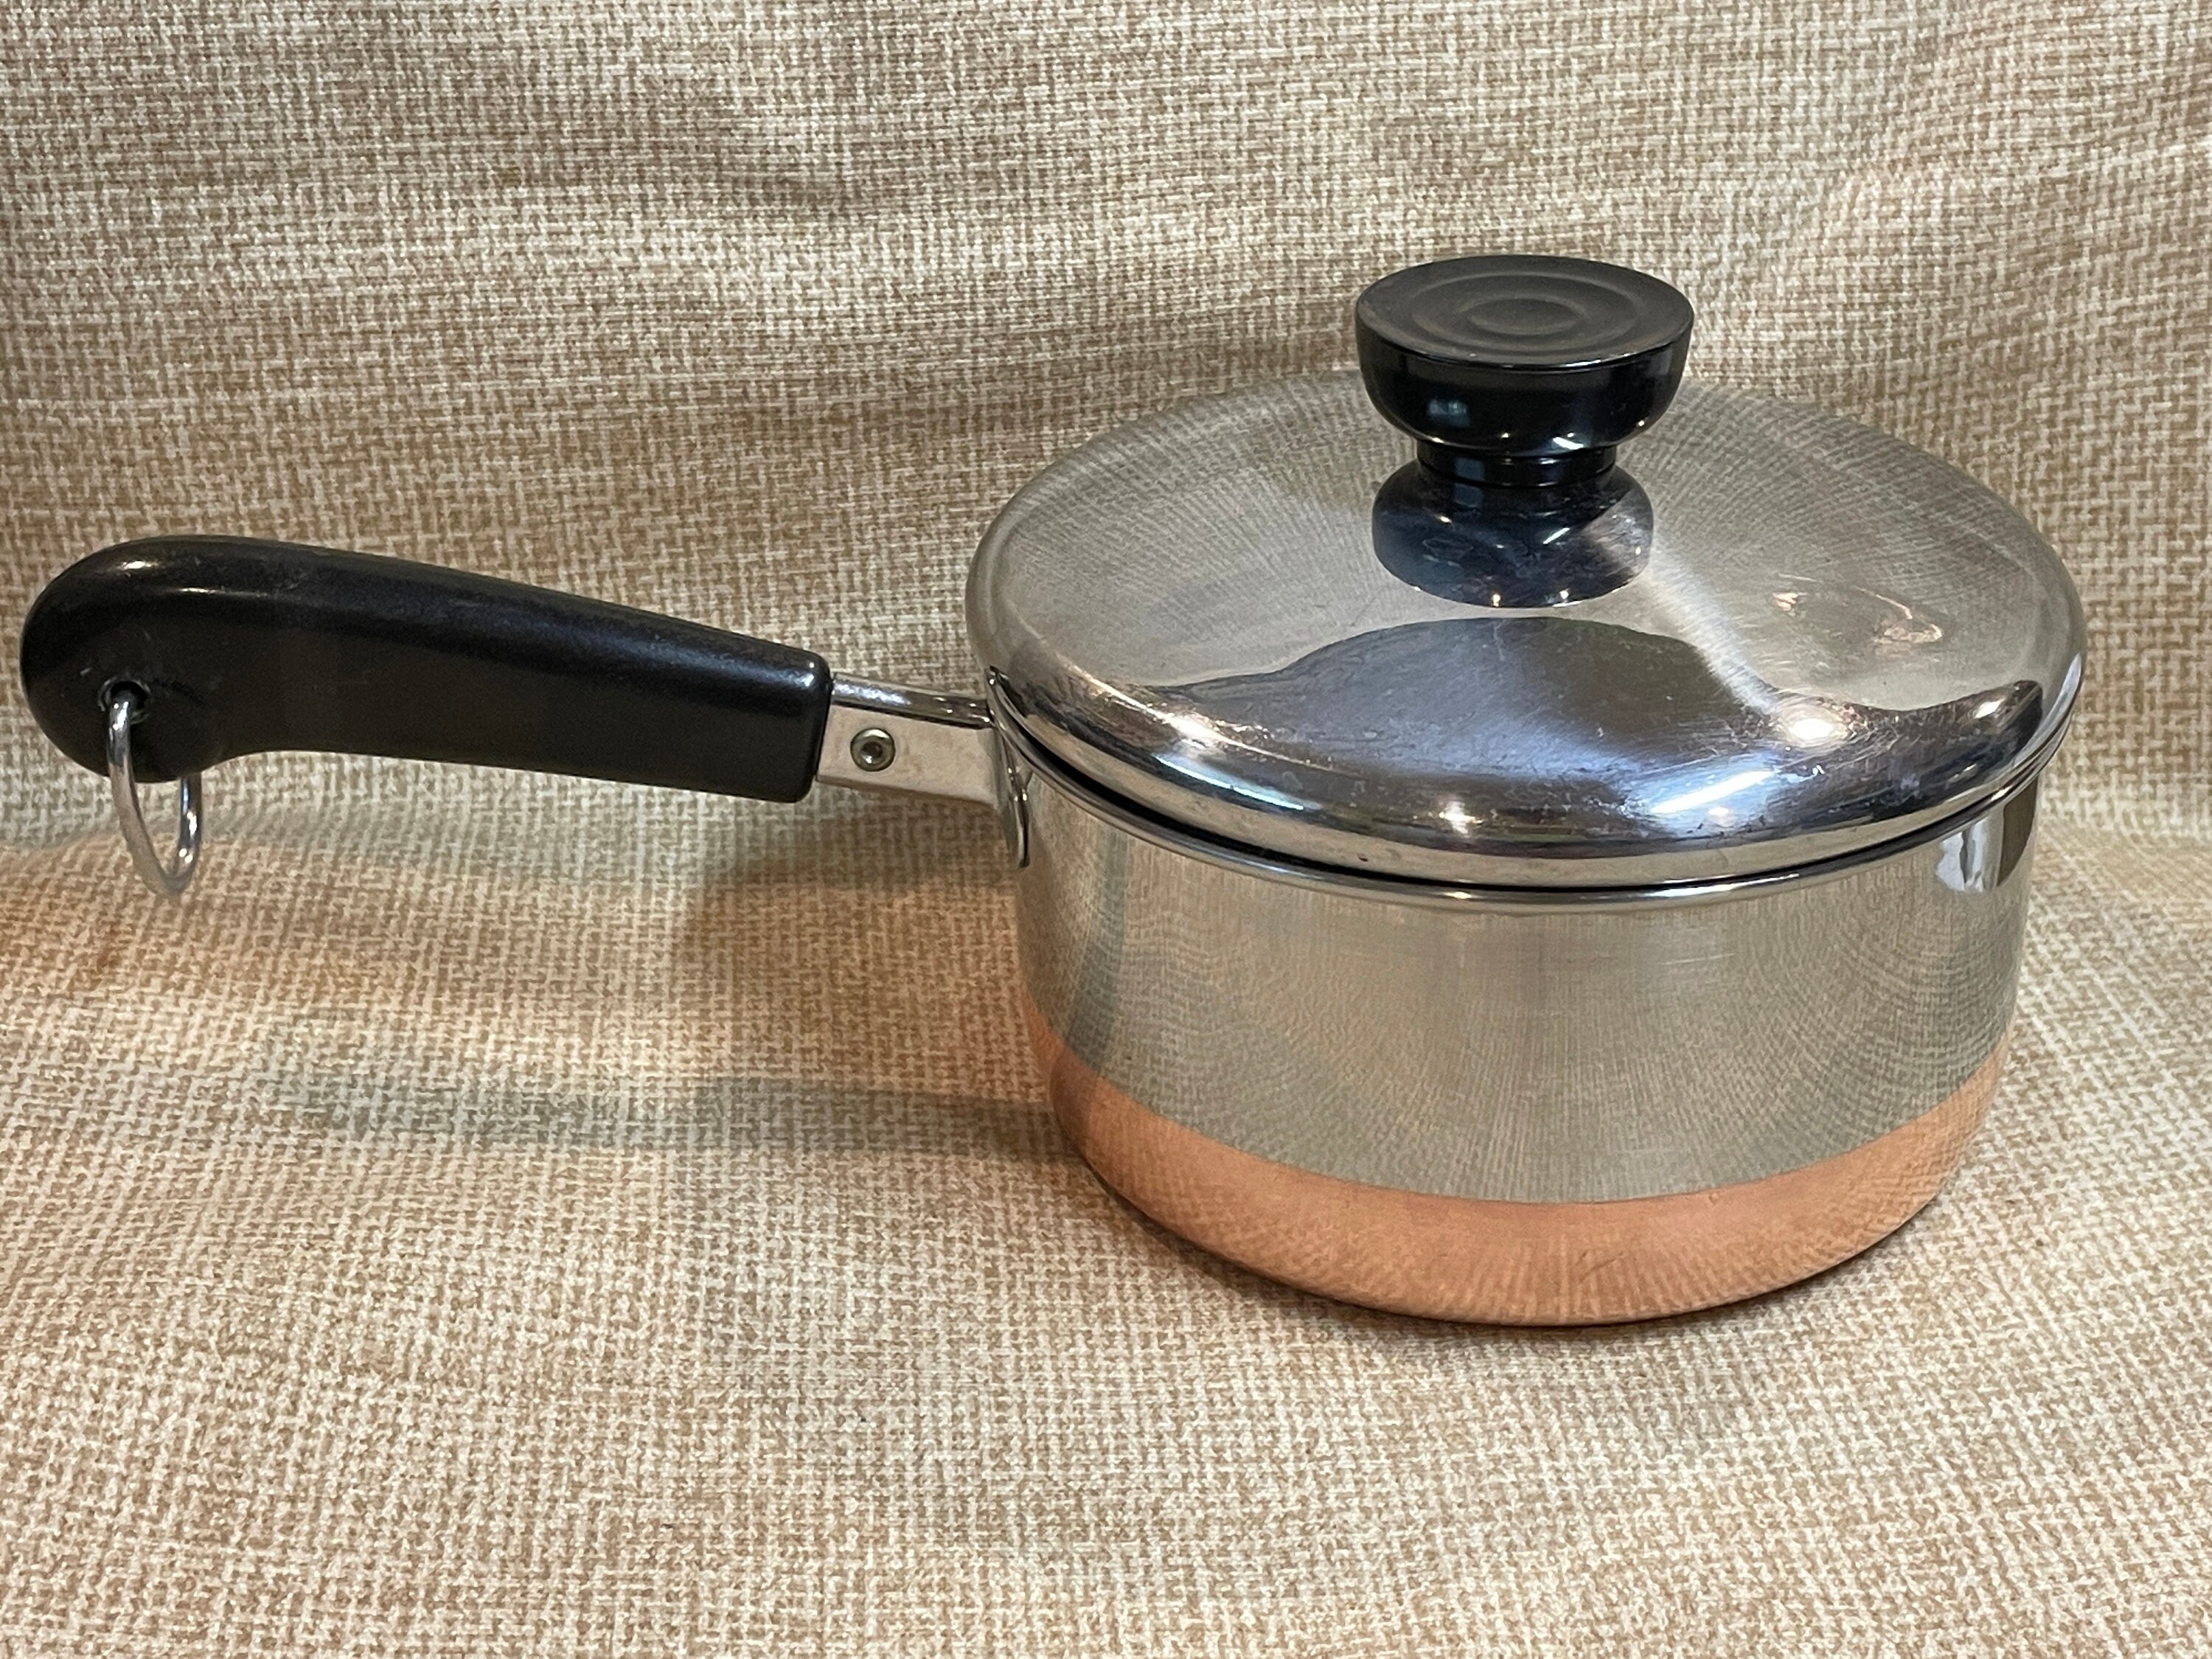 Revere Ware Pots With Lids, Copper Bottom, 1 2 Quart Pot With Lid, 1 1  Quart Pot With Lid, and 1 Pint Sauce Pan, LOT of 3 